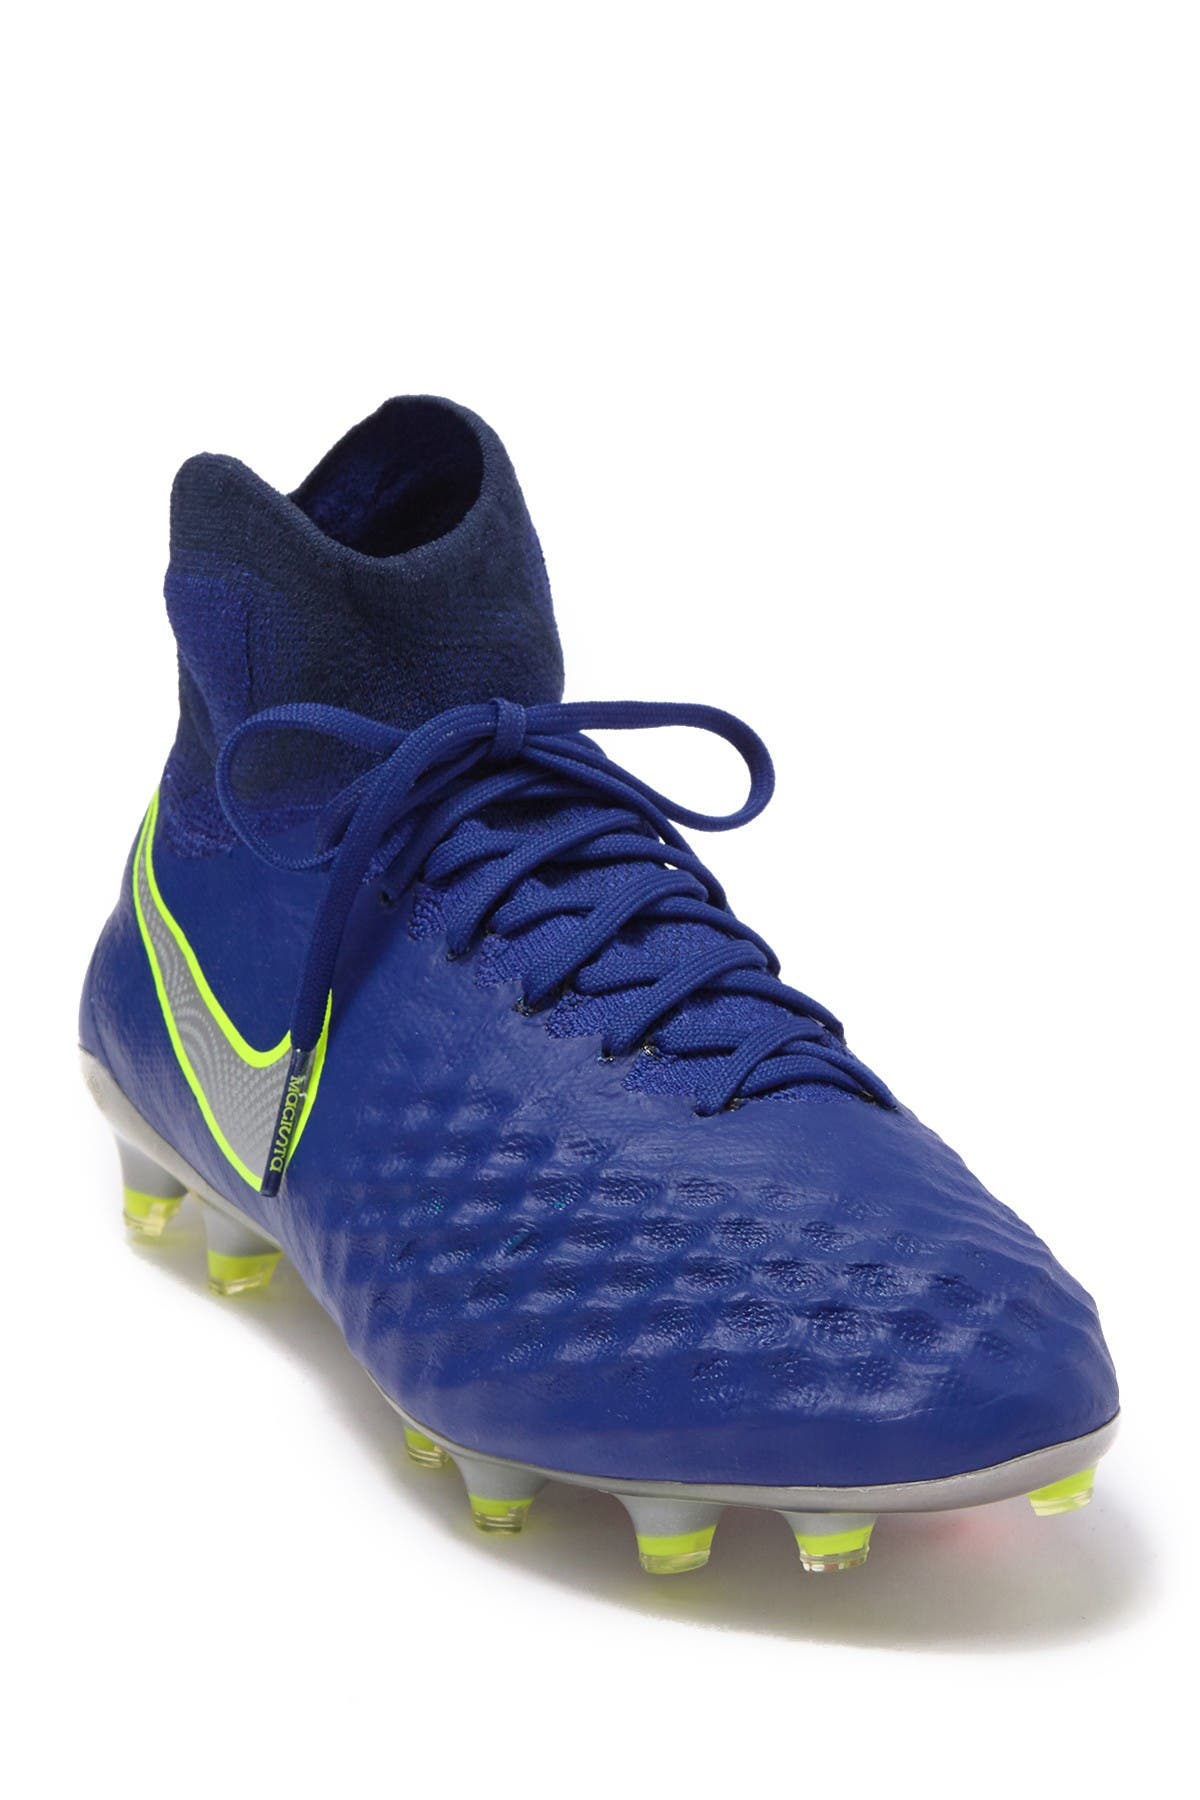 Nike | Magista Obra II Soccer Cleat 